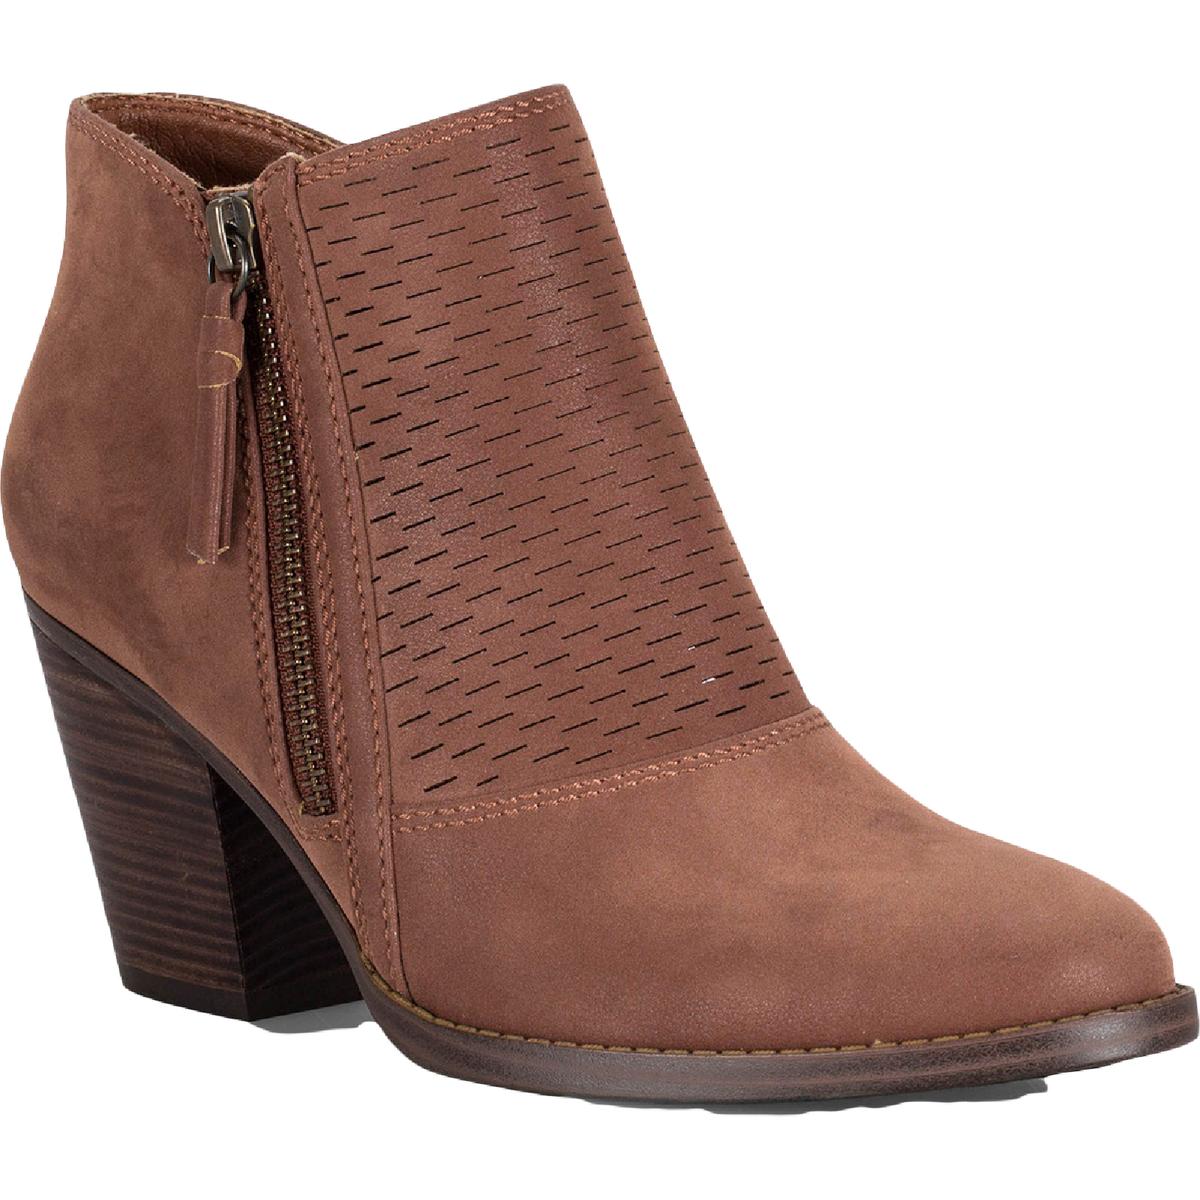 Baretraps Womens Cacie Almond-Toe Block-Heel Zipper Ankle Boots Shoes BHFO 5558 